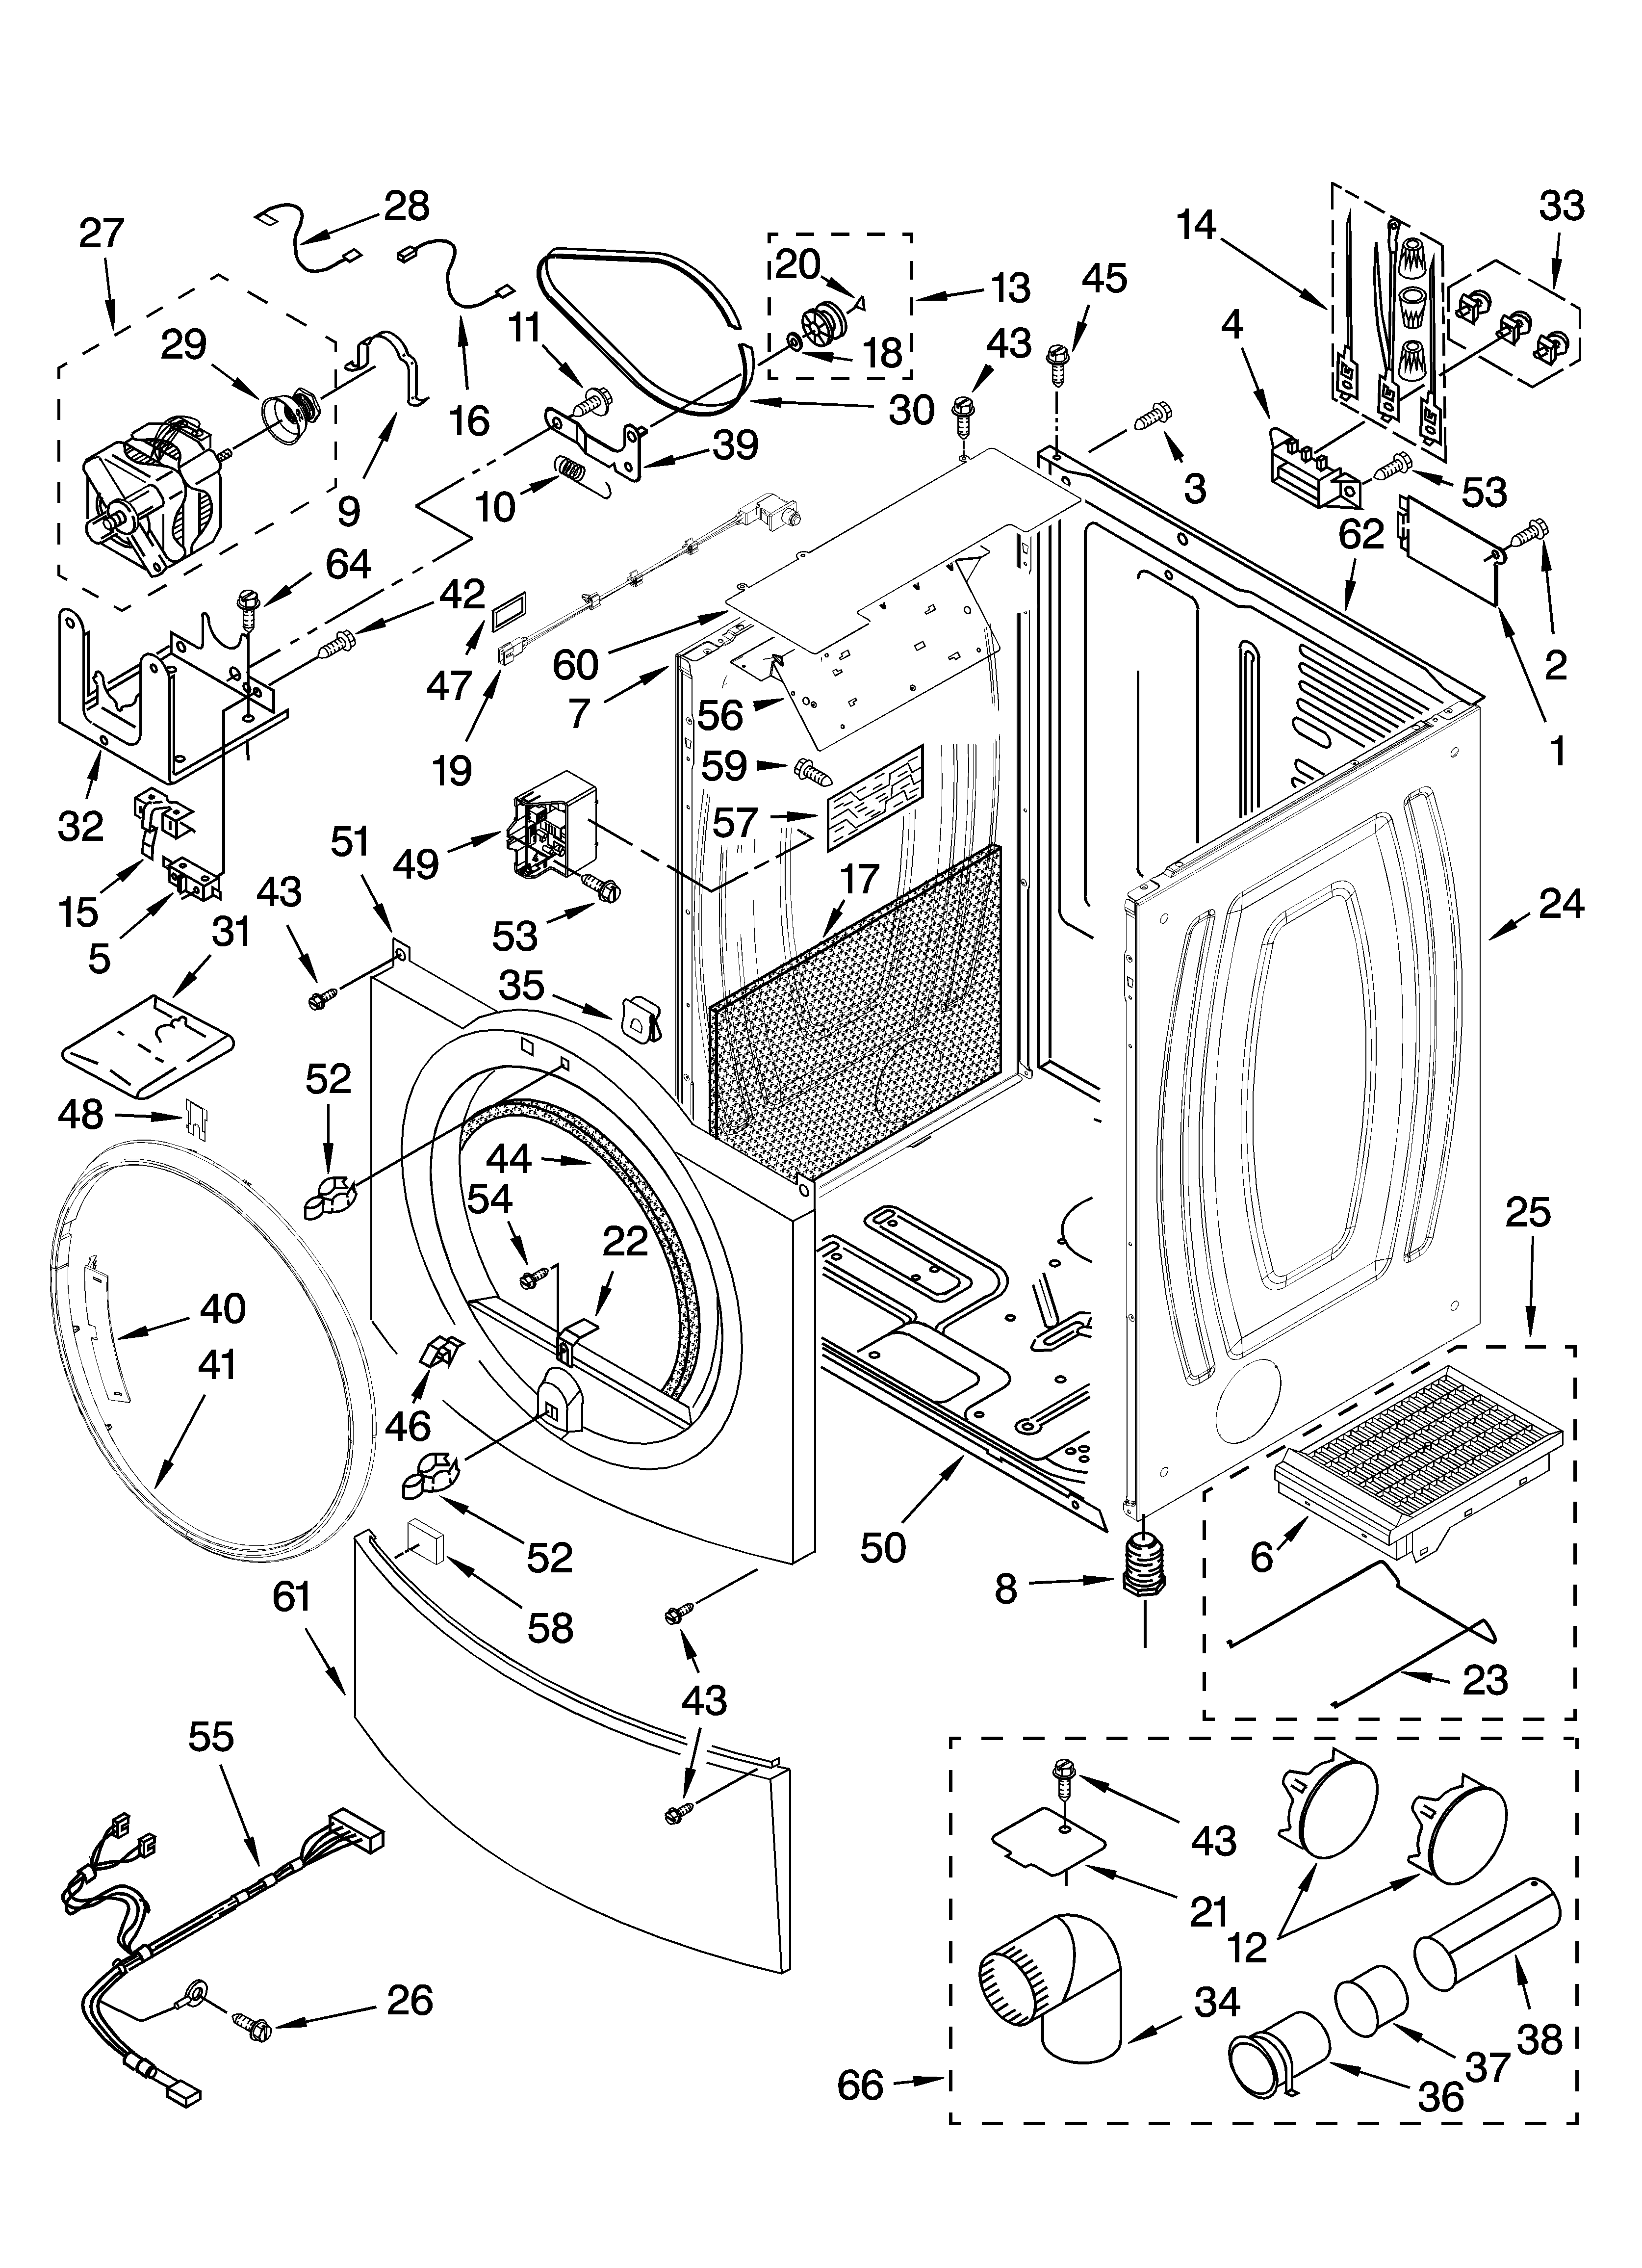 Kenmore Dryer Power Cord Wiring Diagram - Wiring Diagram Schemas